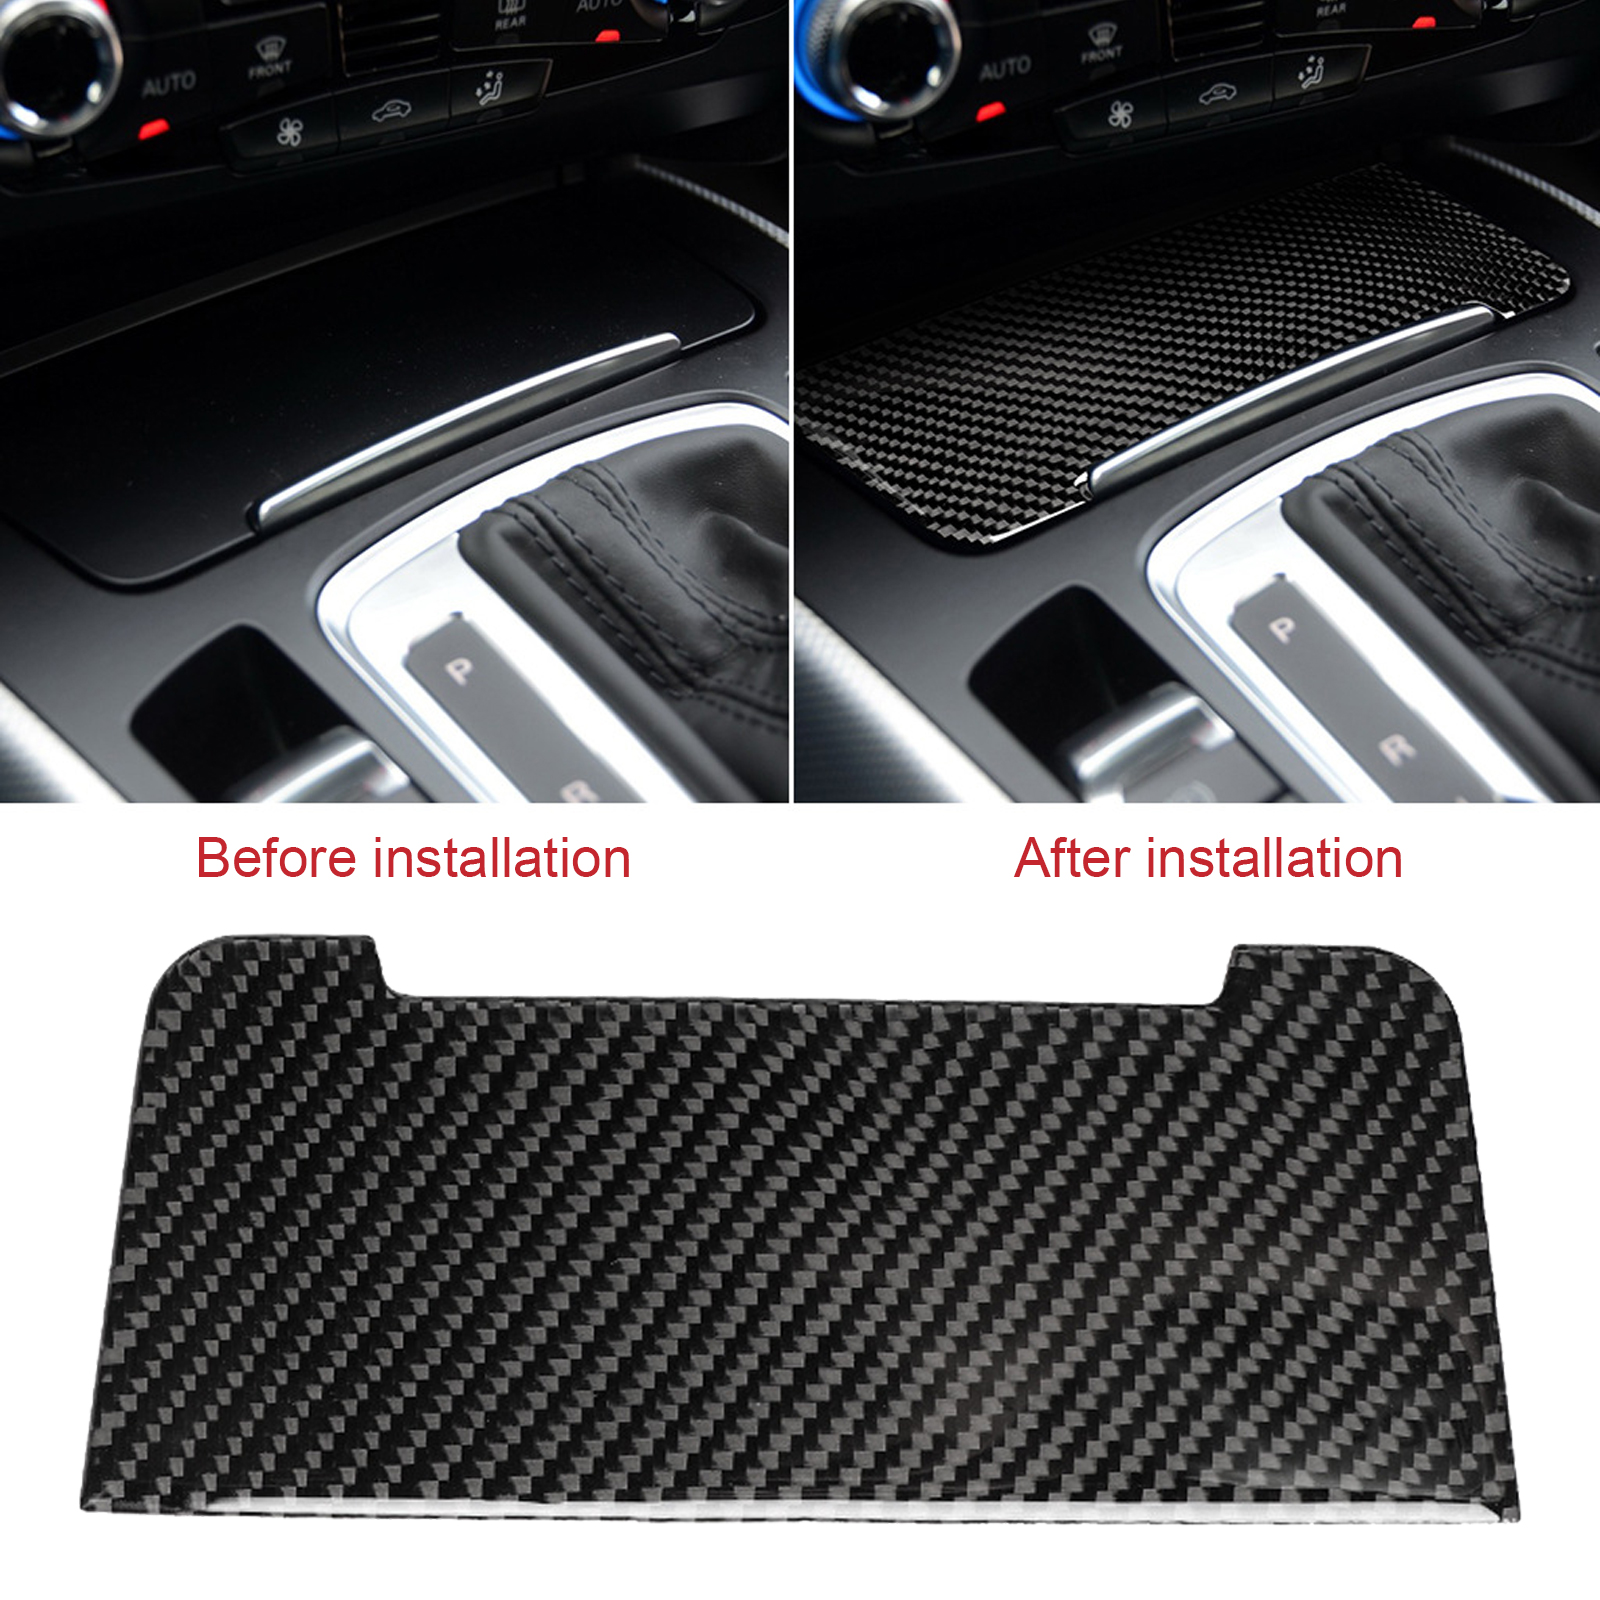 miusani Carbon Fiber Interior Sticker Decoration Trim Cover Decals Compatible with Audi A4 B8 A5 Q5 Accessories RT06 Center Air Outlet AC Vent Frame Type A 